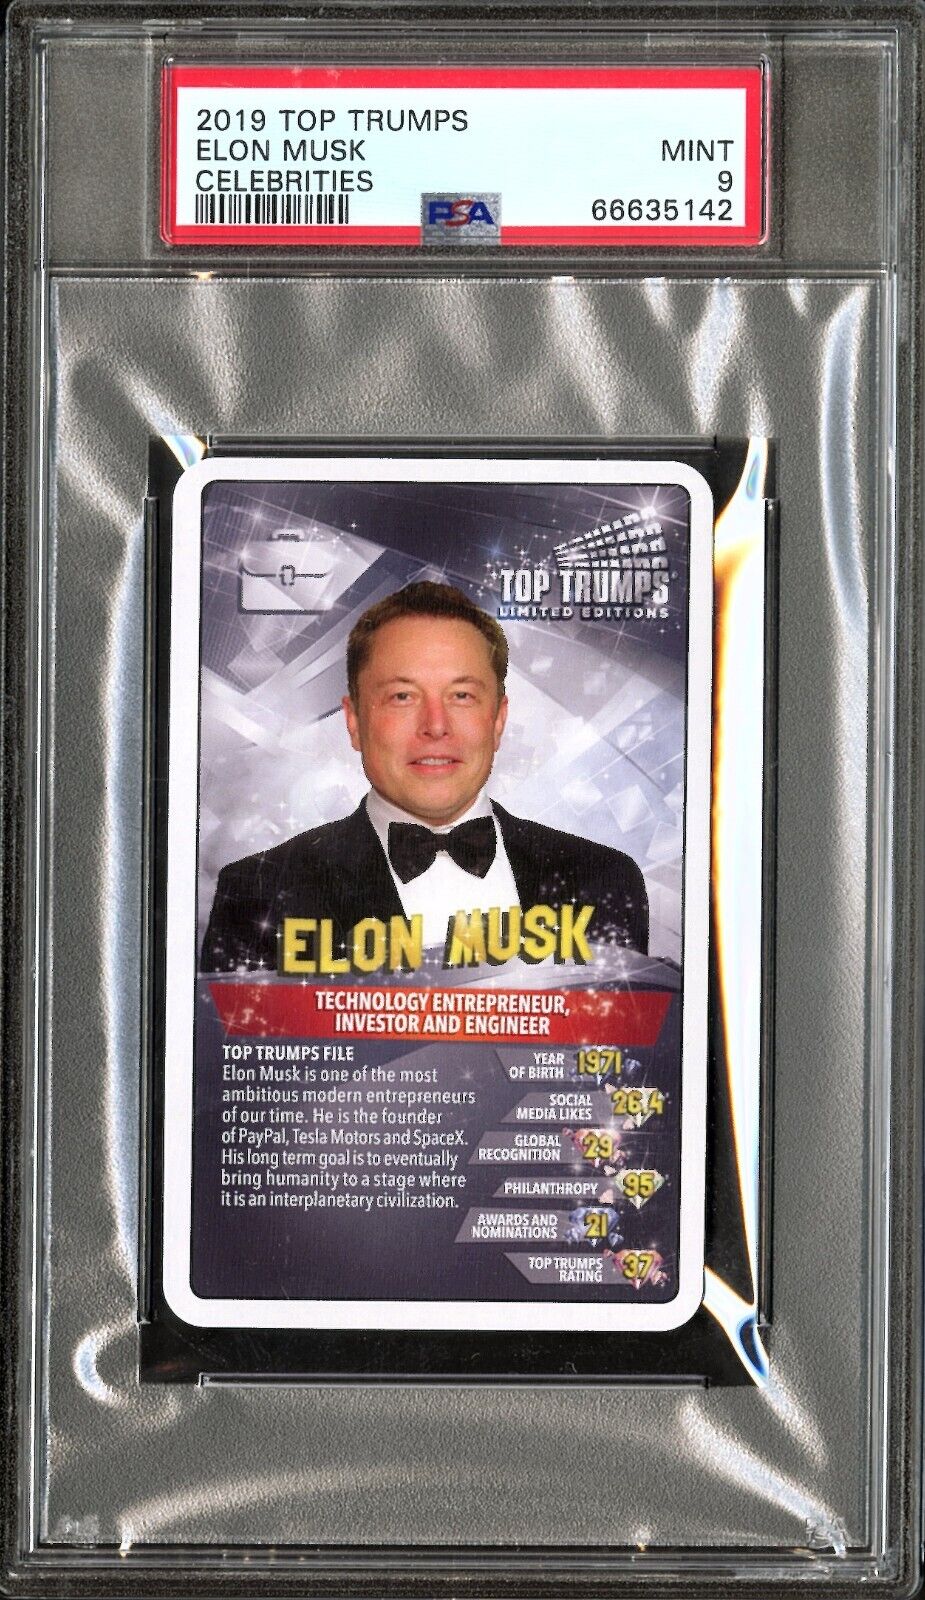 2019 Top Trumps Elon Musk ROOKIE PSA 9 MINT Limited Edition Celebrities